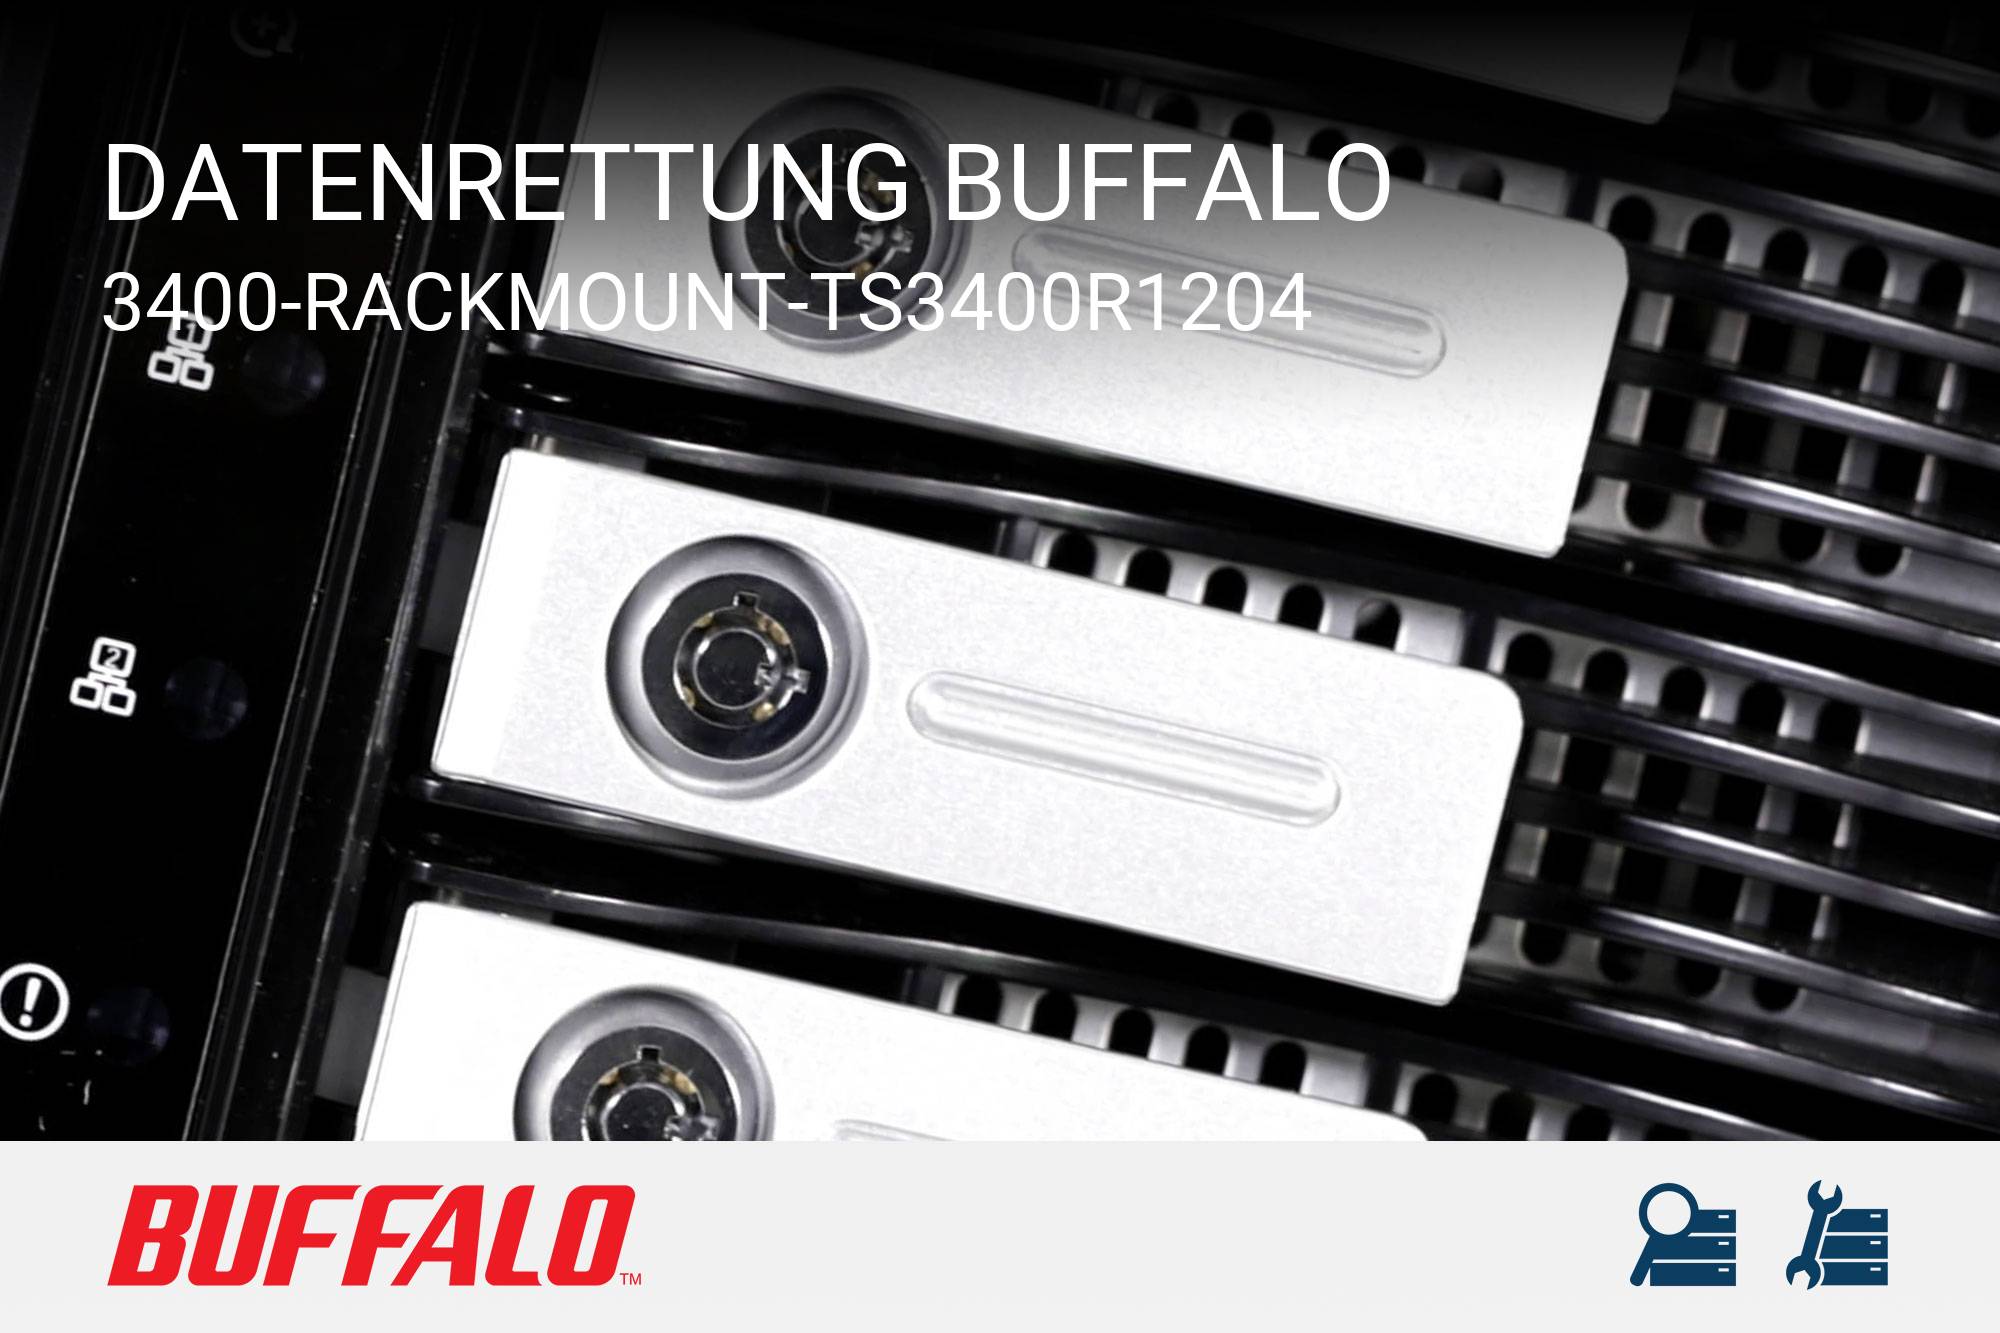 Buffalo 3400-Rackmount-TS3400R1204